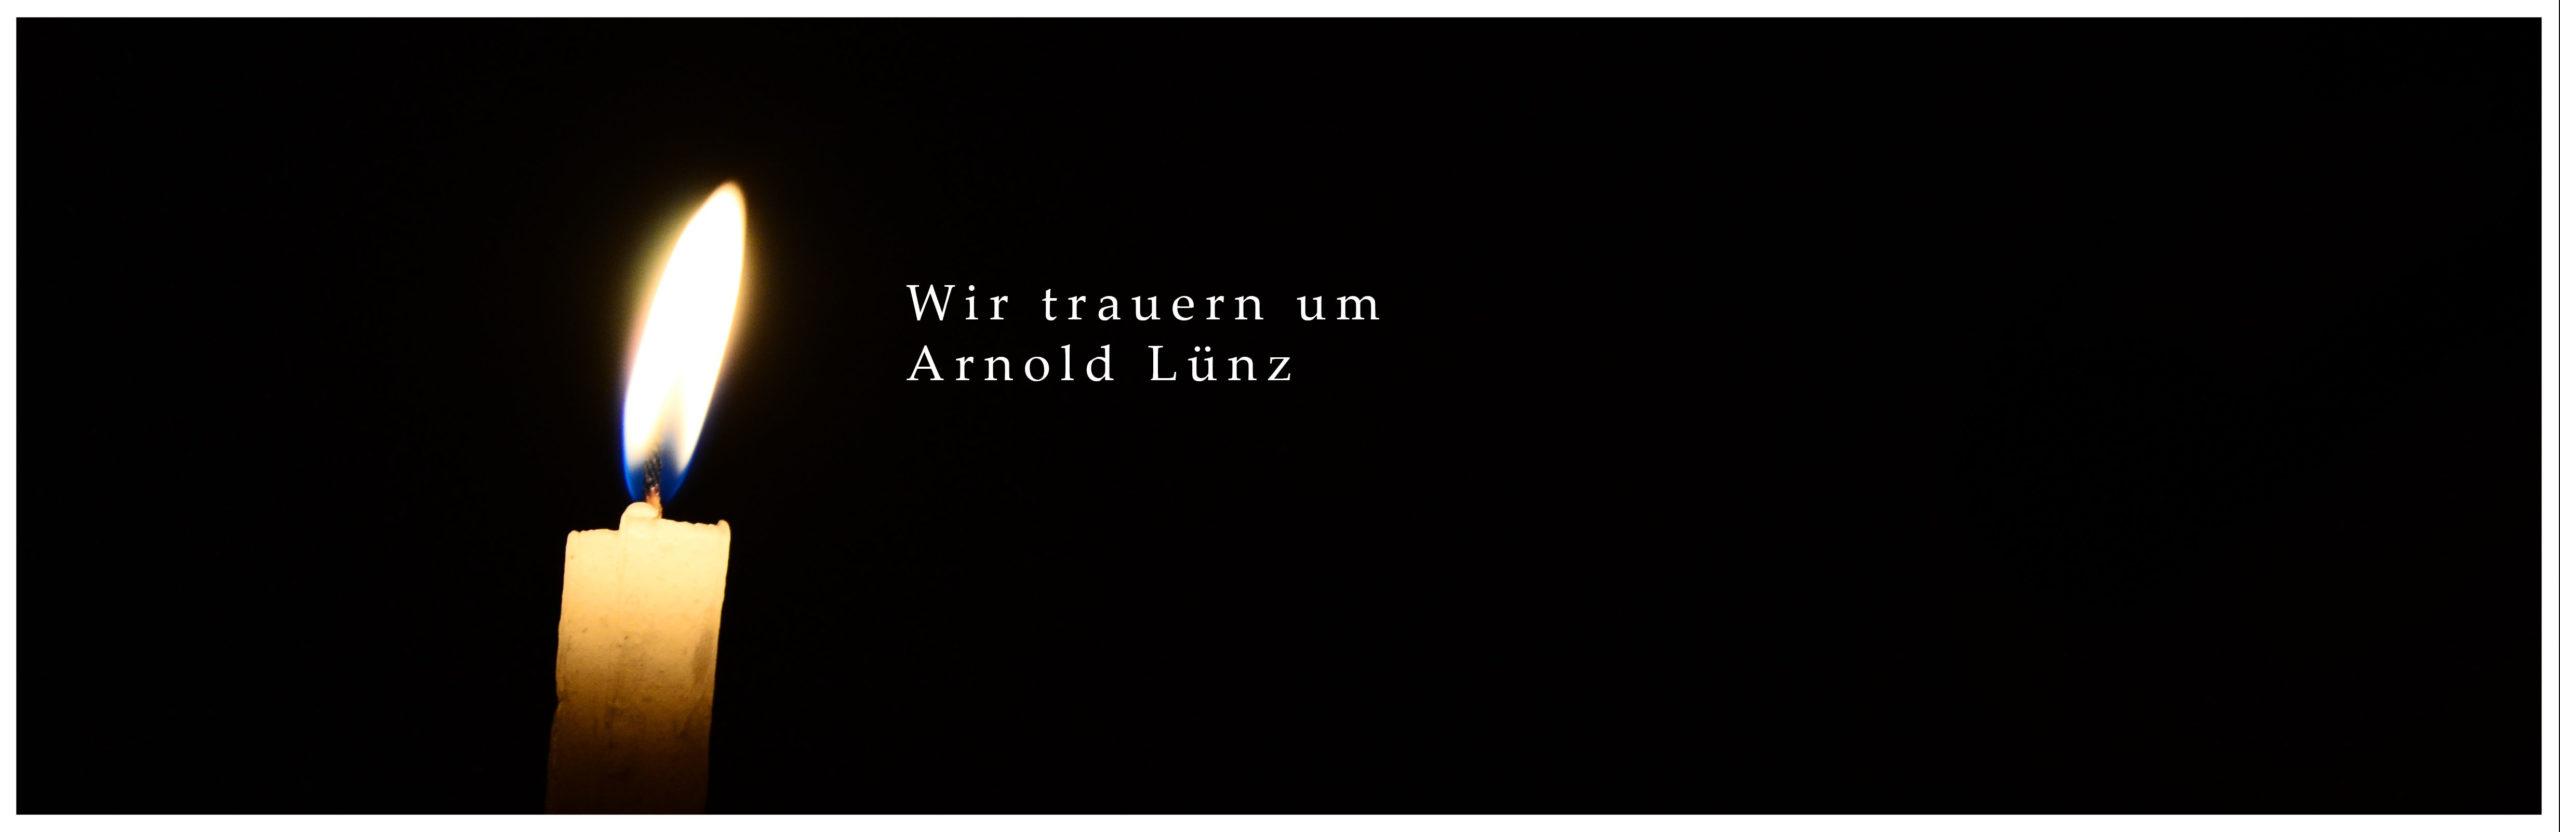 Nachruf – Trauer um Arnold Lünz